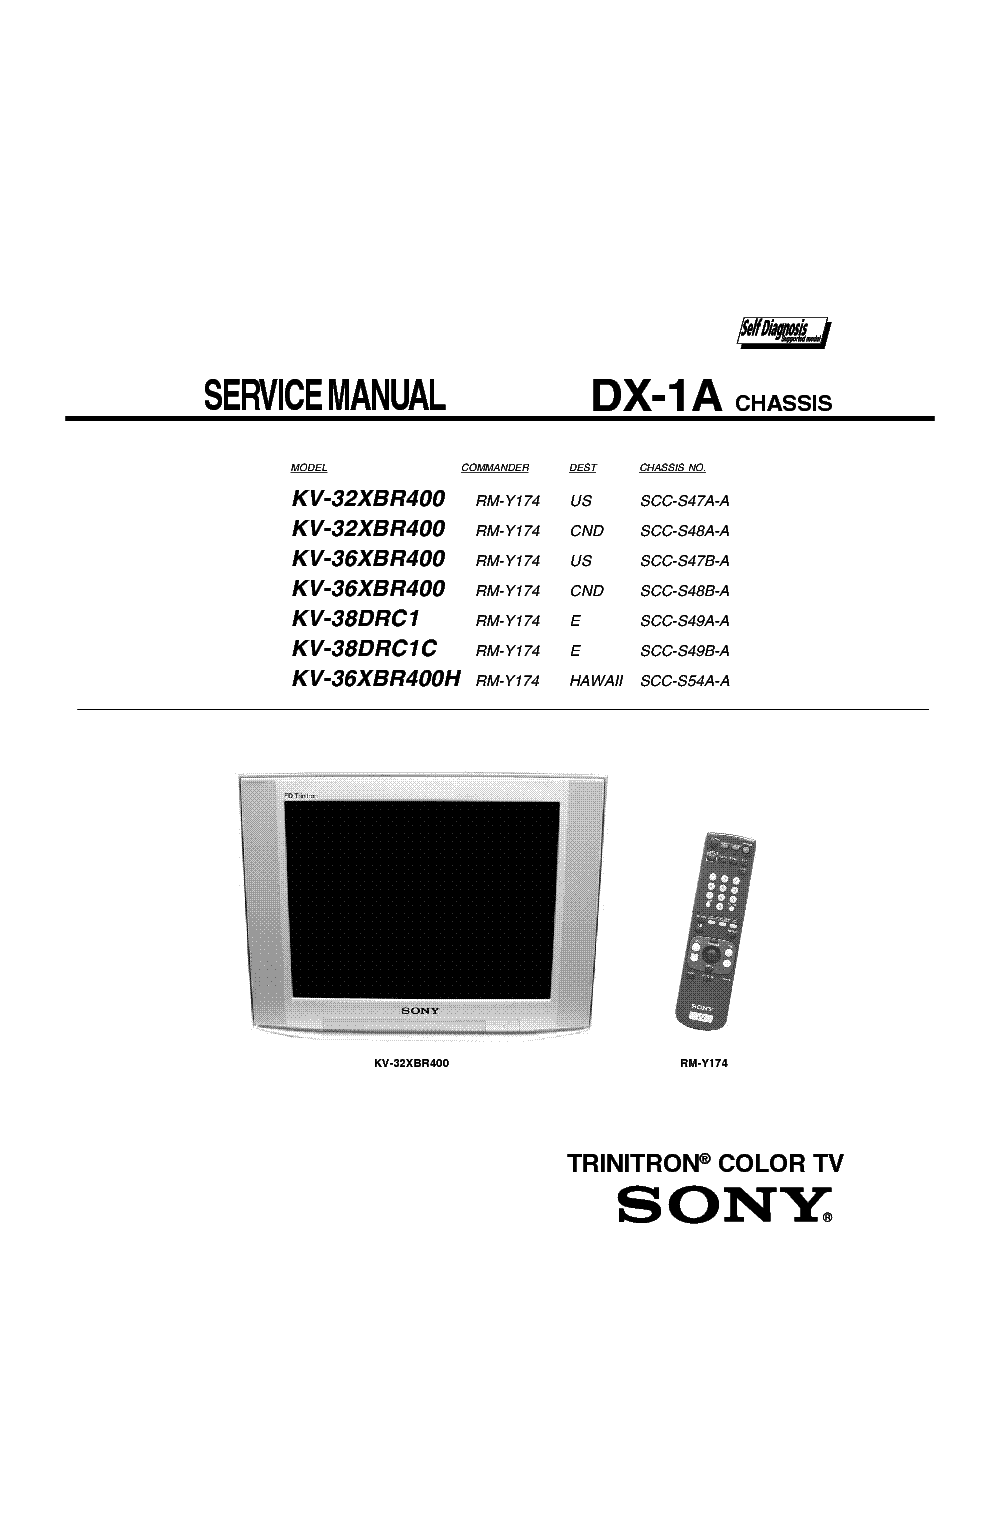 SONY KV32XBR400 36XBR400 38DRC1 CH DX1A SM service manual (1st page)